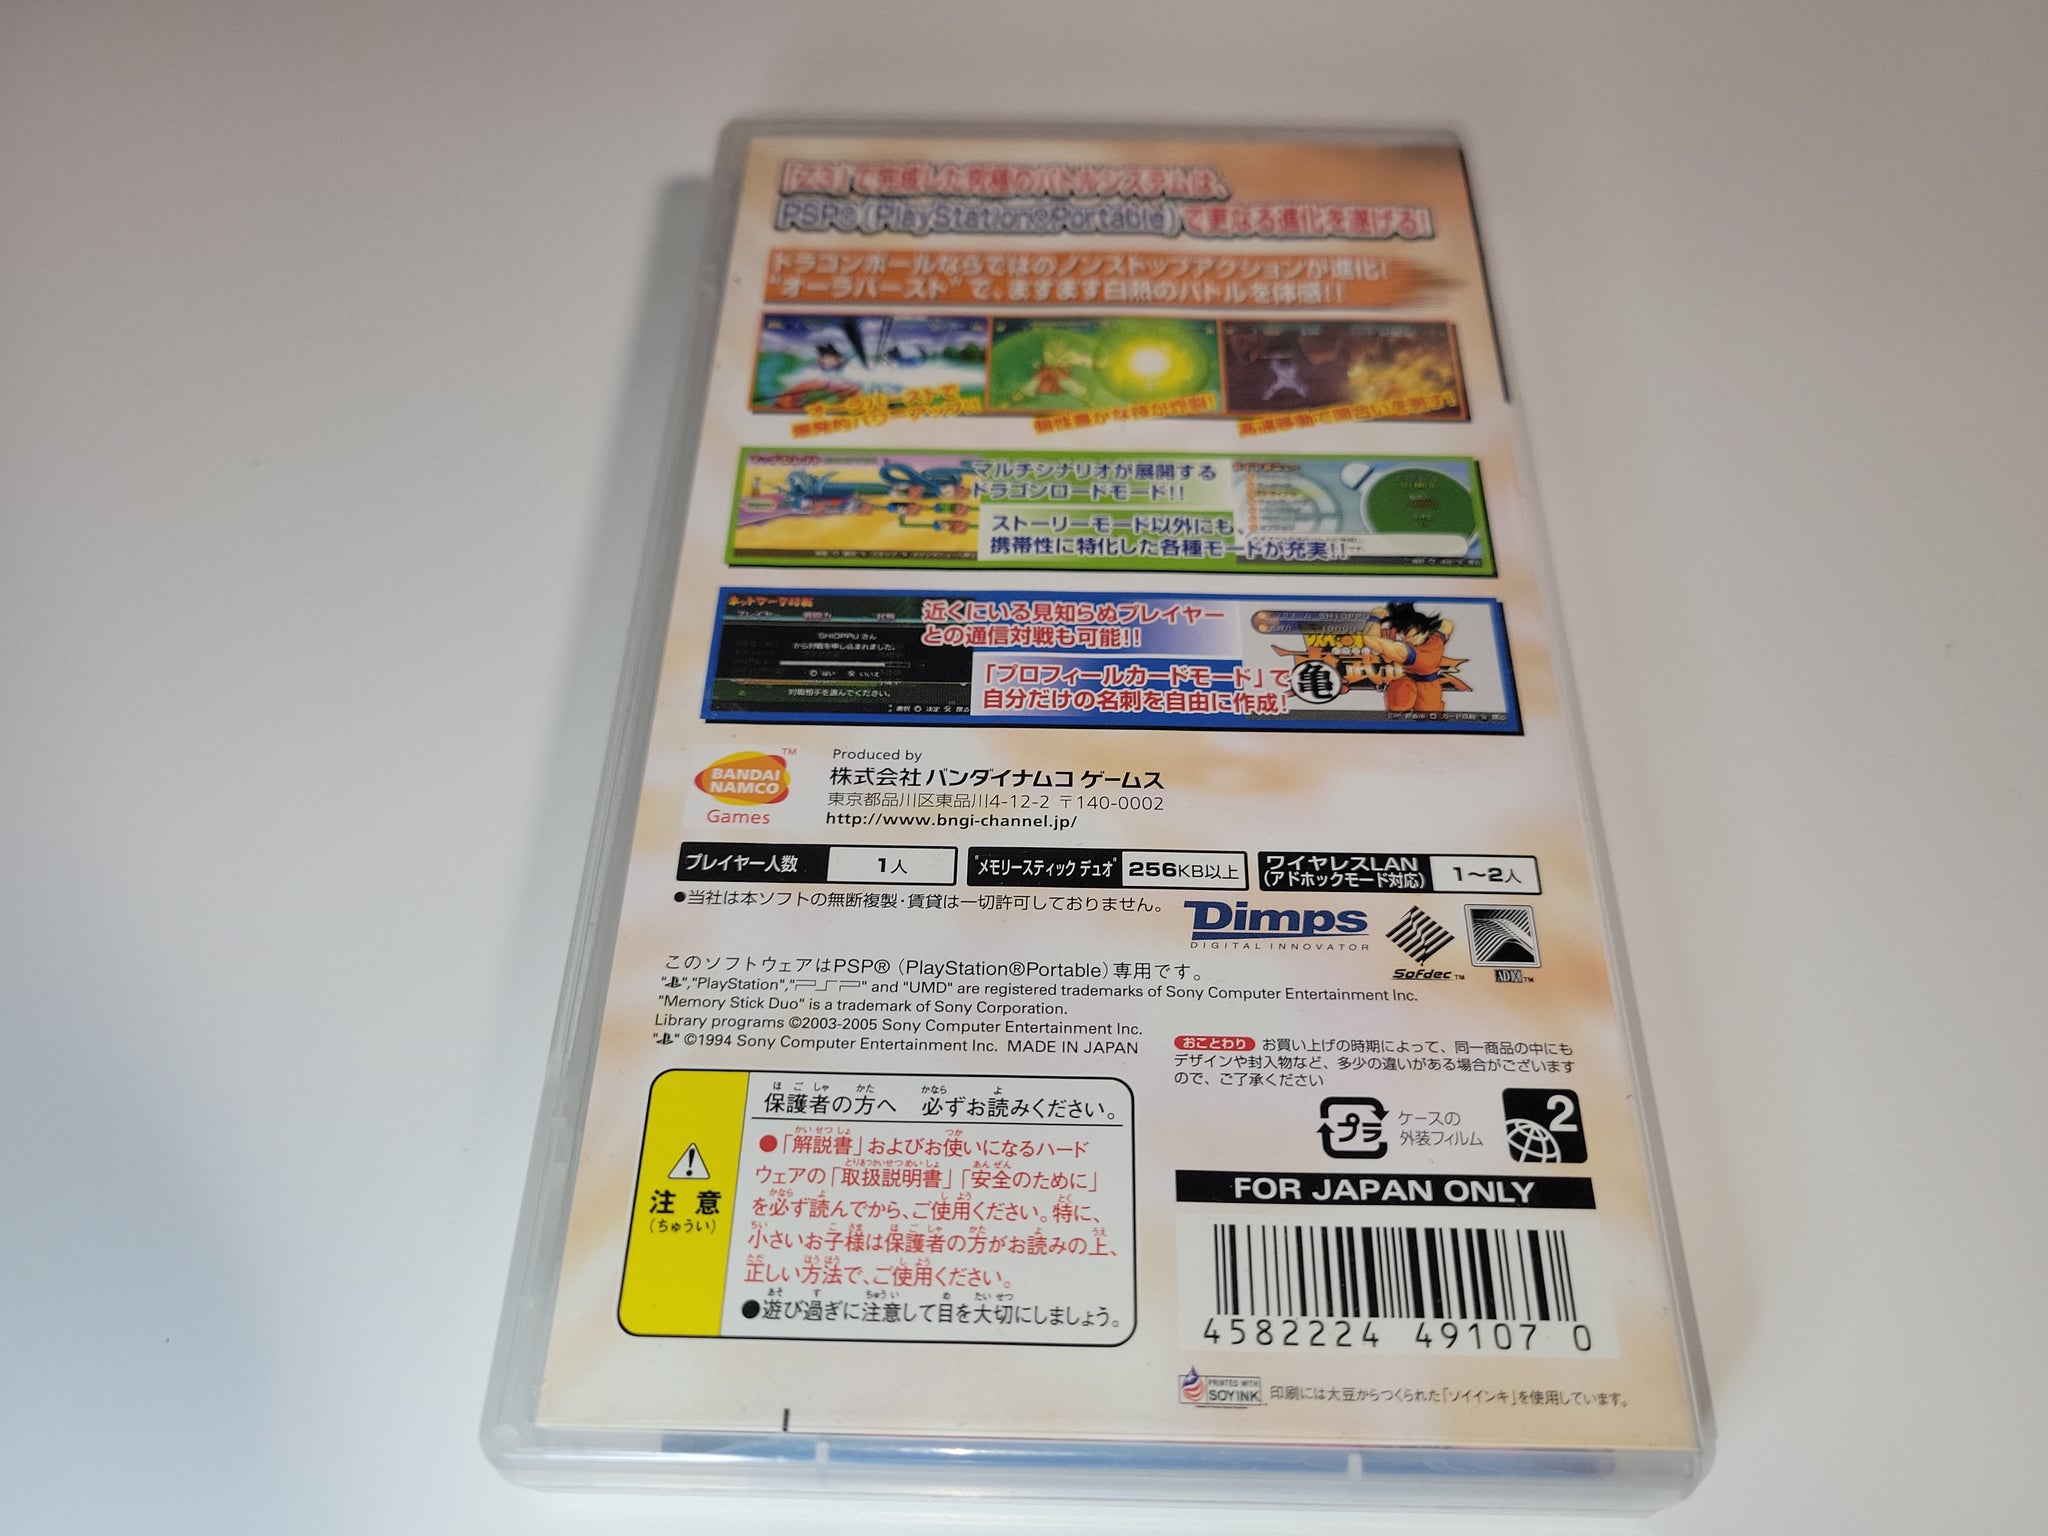 Dragonball Z Shin Budokai PlayStation PSP US English Factory Sealed